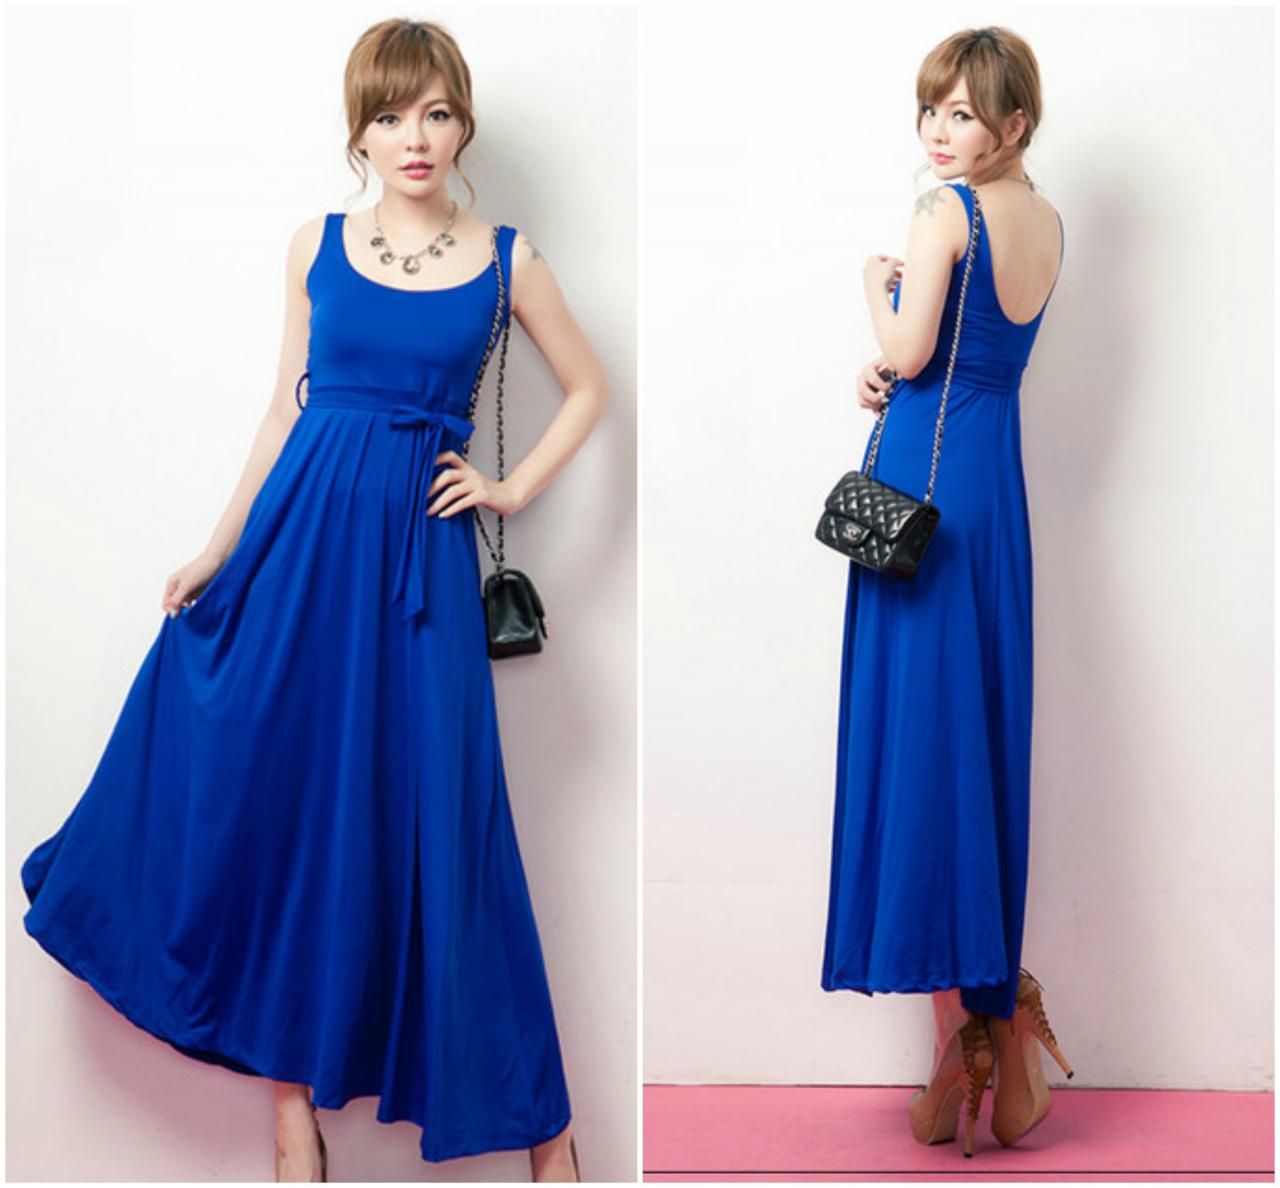 Royal Blue Sleeveless Maxi Dress on Luulla